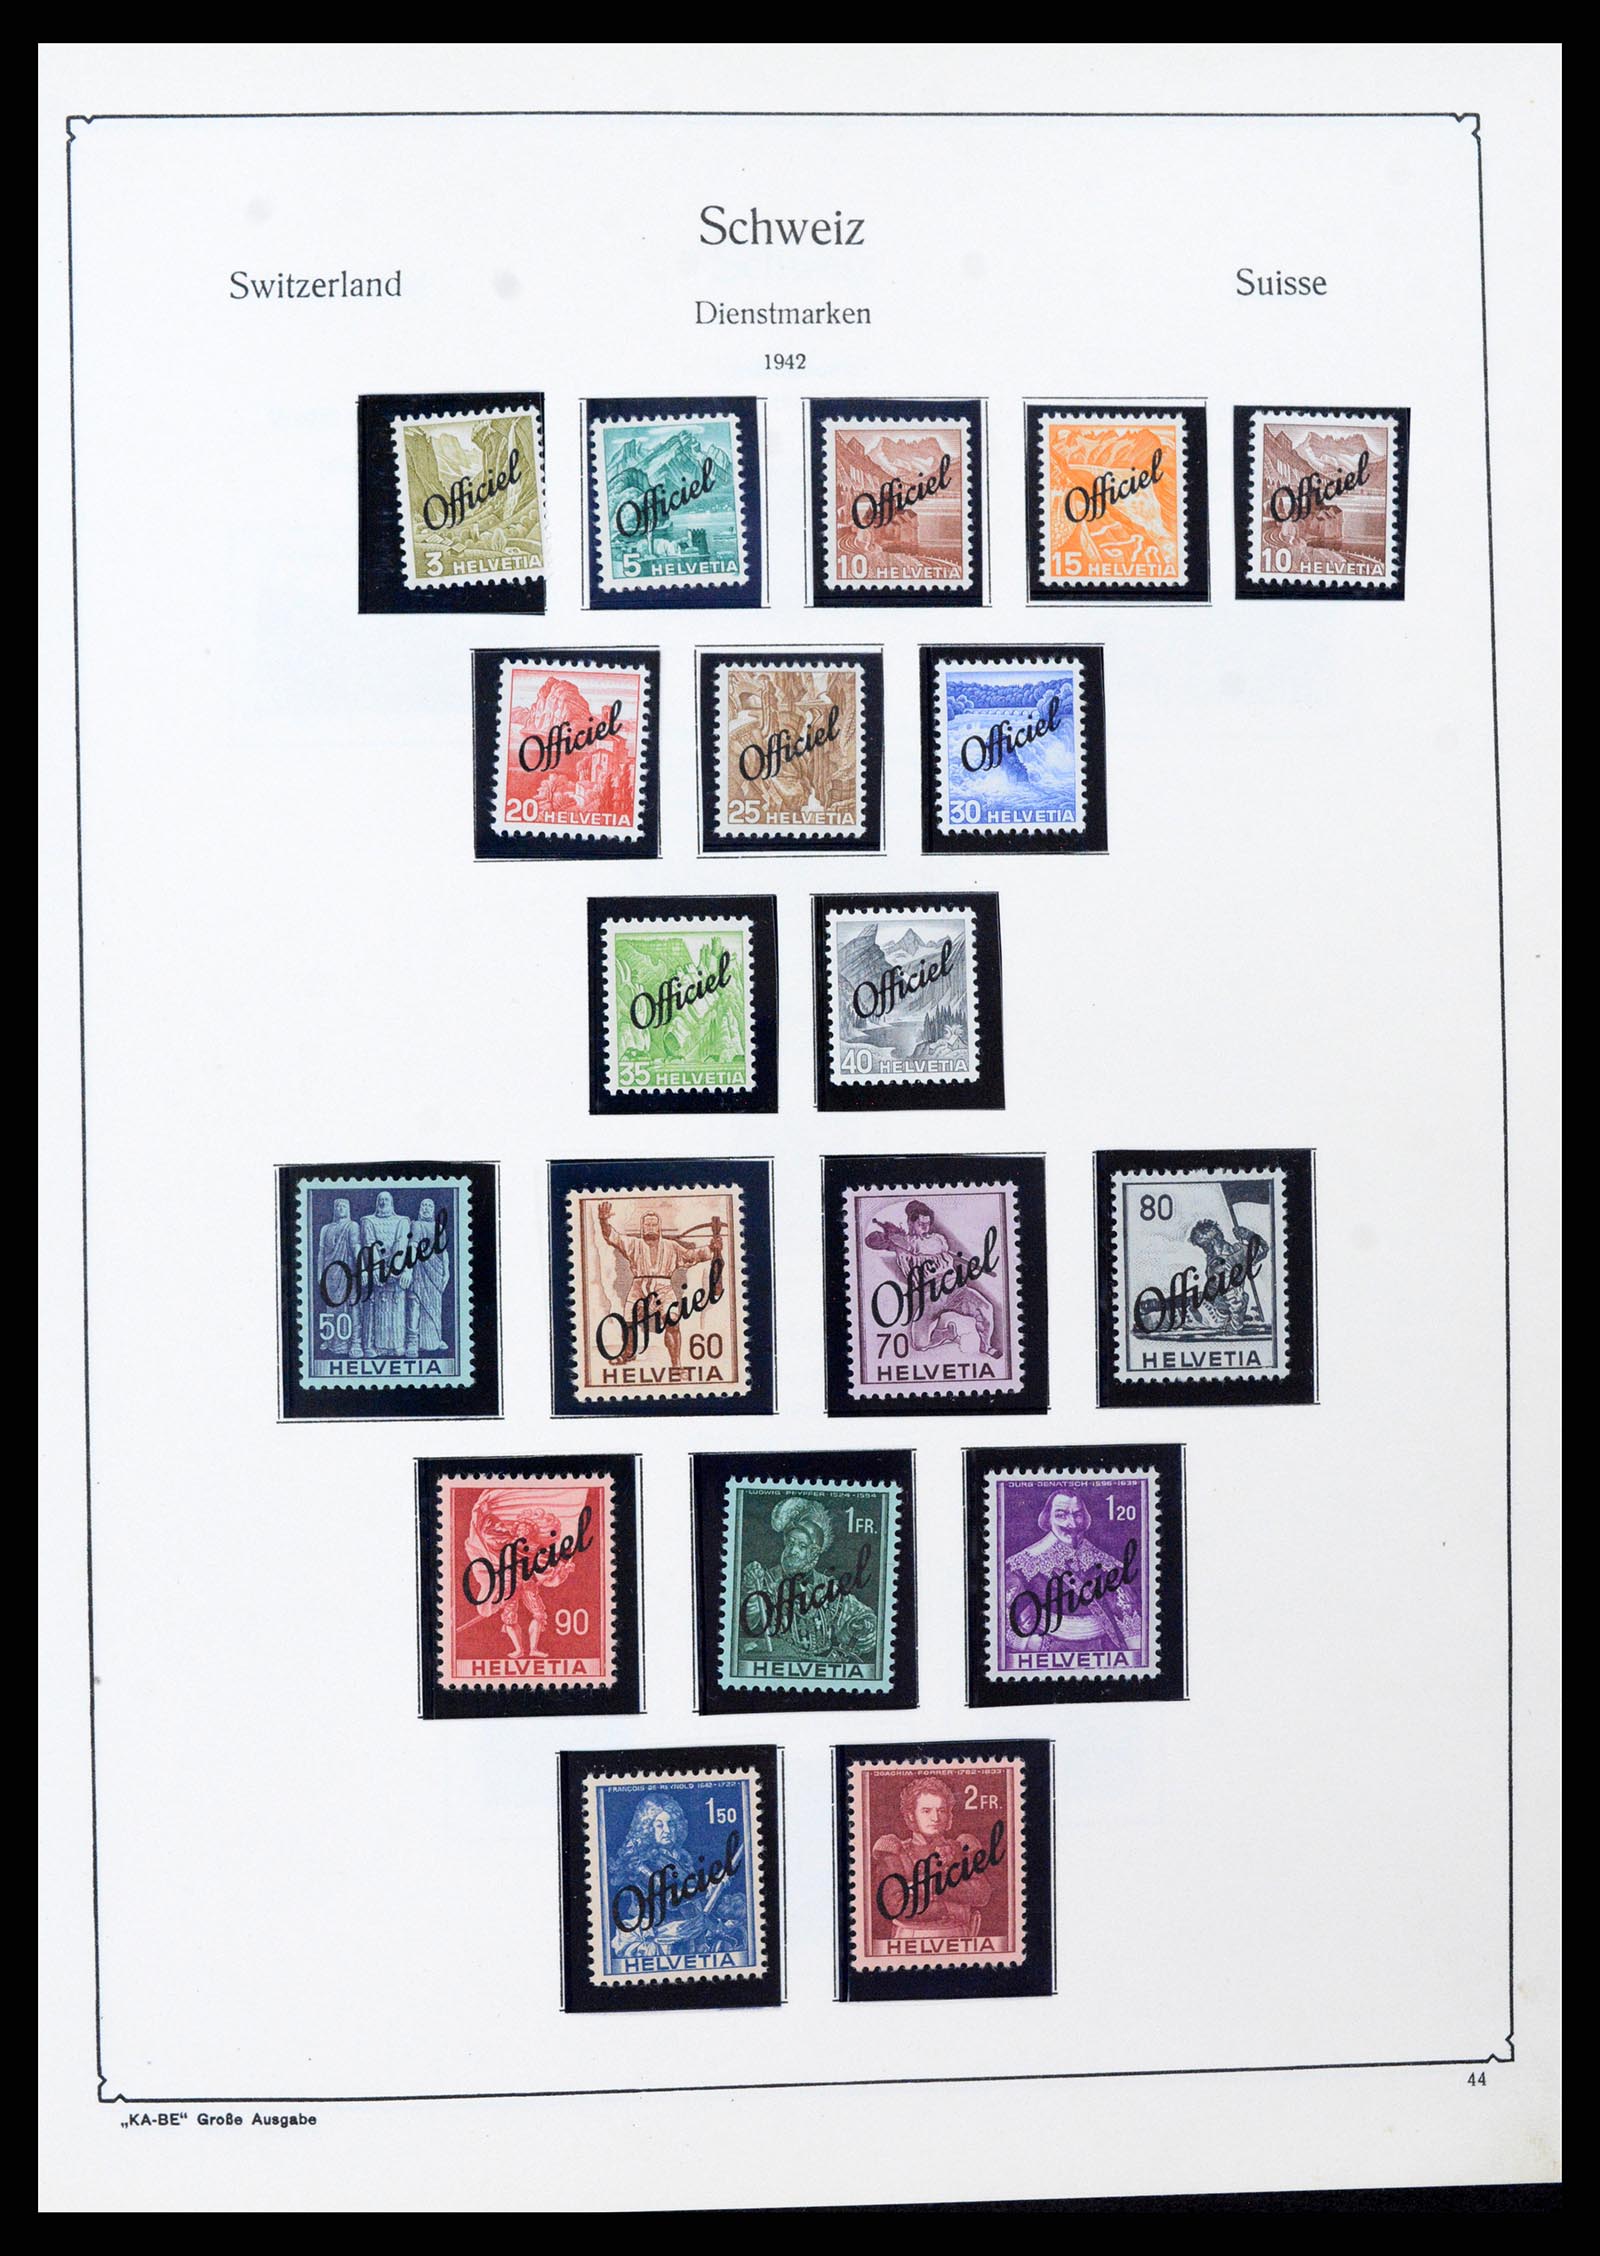 37588 042 - Stamp collection 37588 Switzerland 1854-1974.